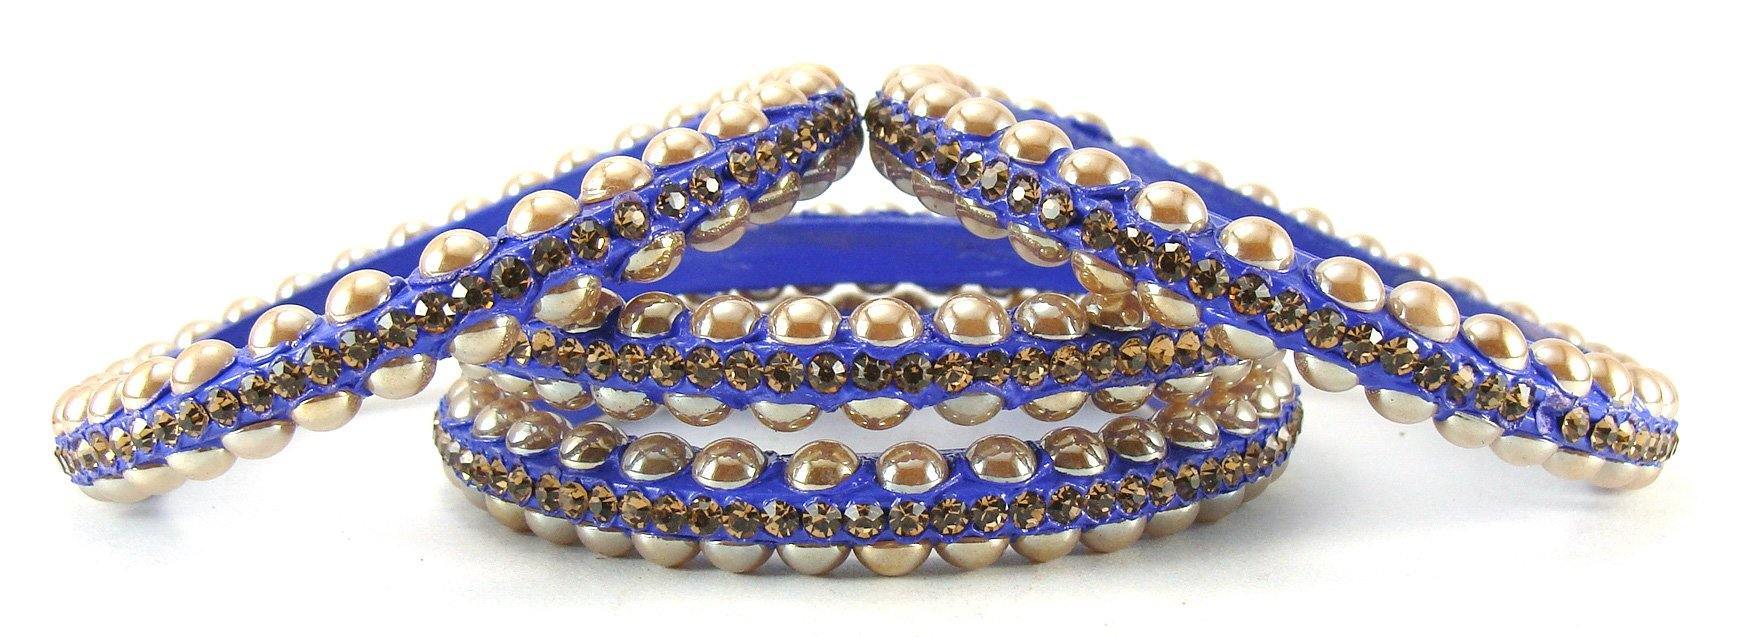 sukriti rajasthani contemporary blue lac bangles for women - set of 4